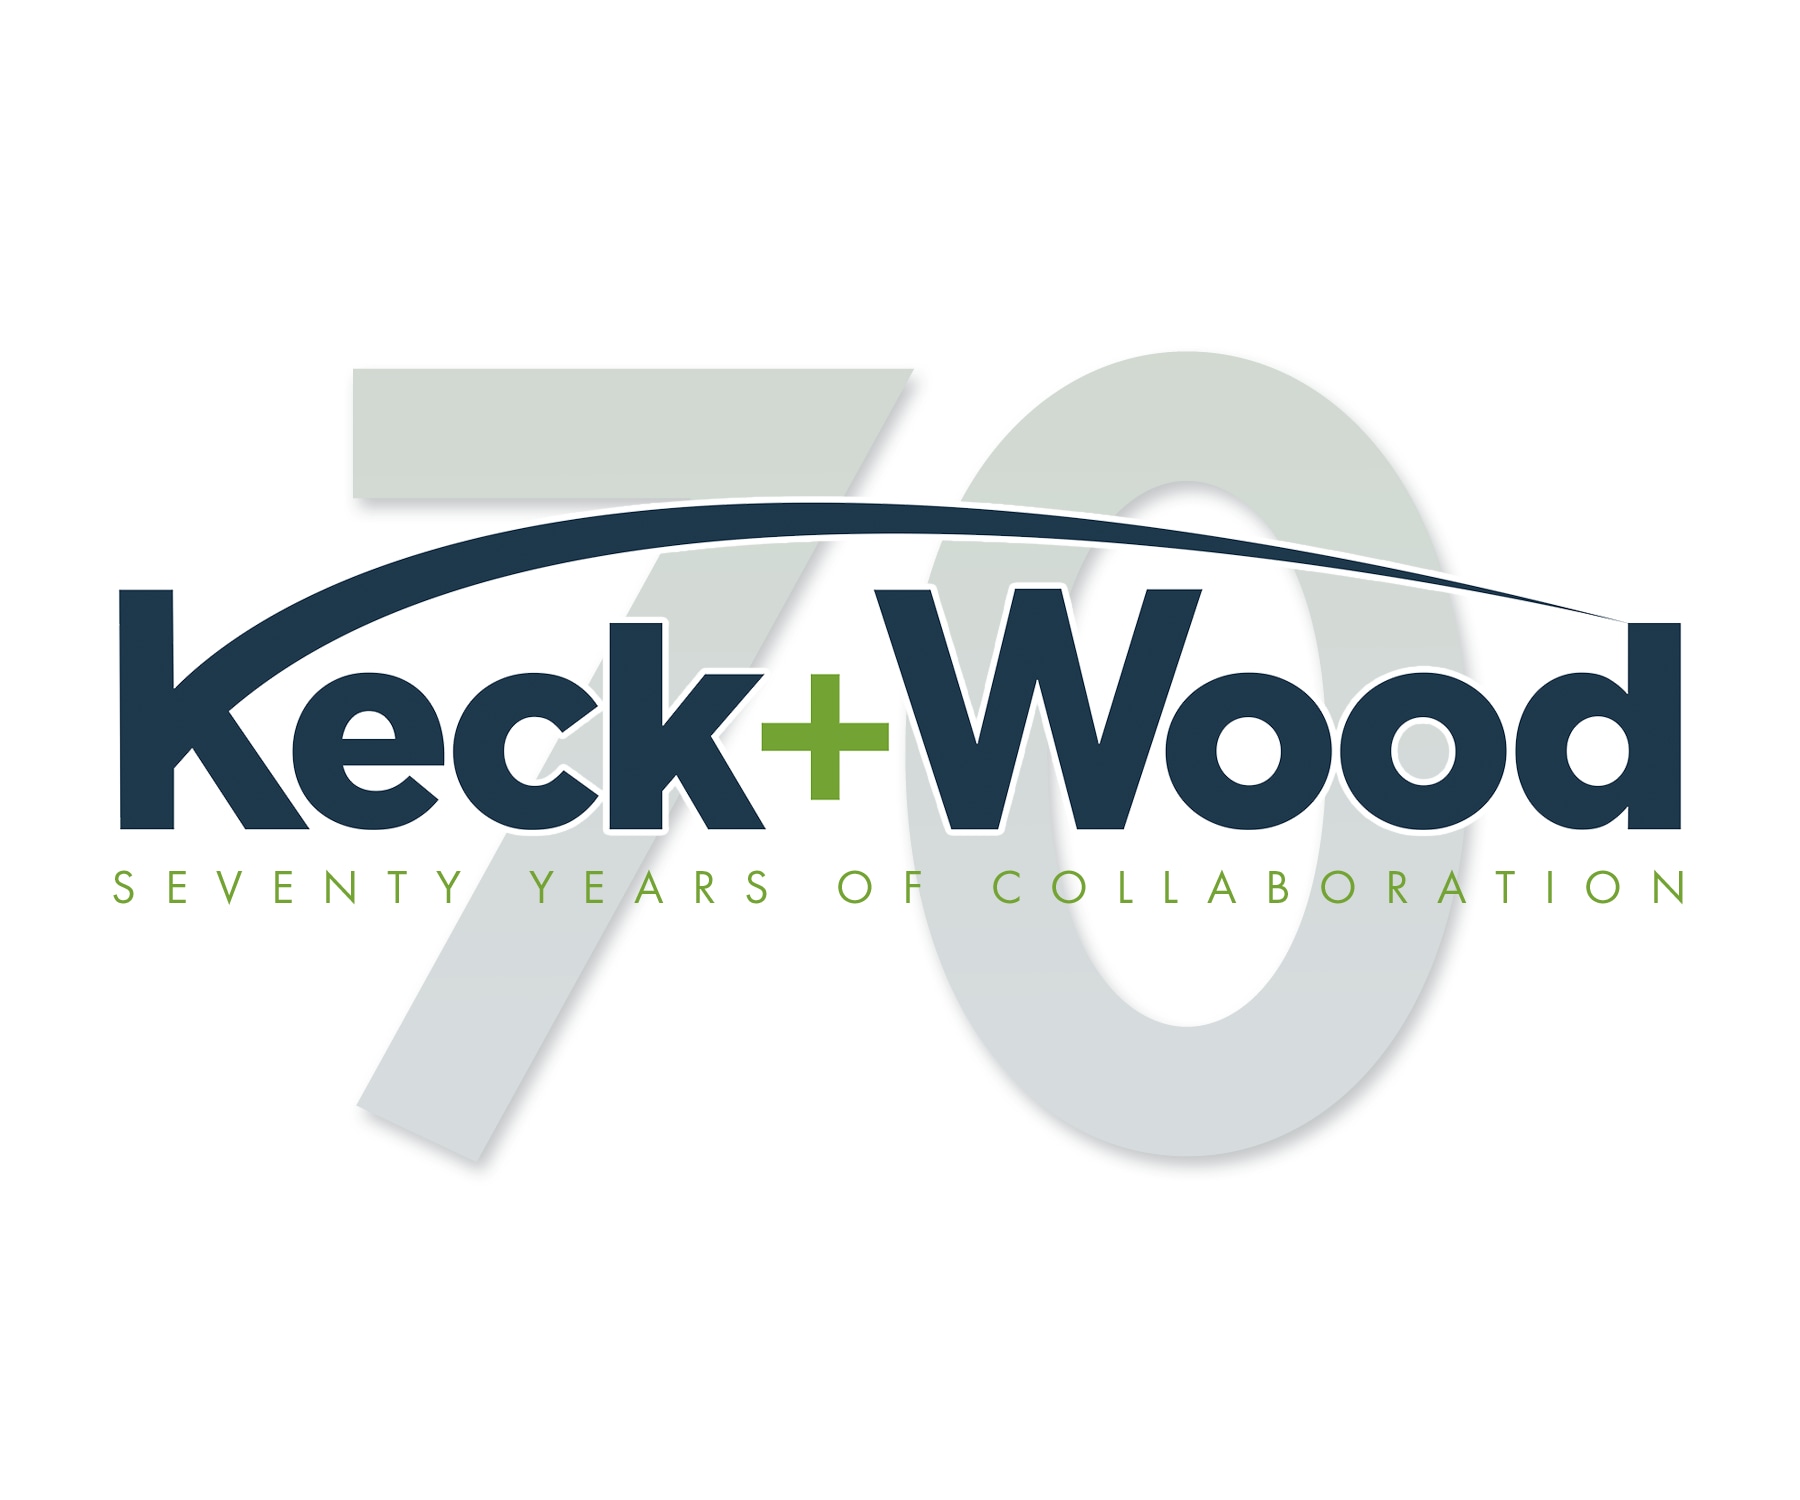 Keck+Wood